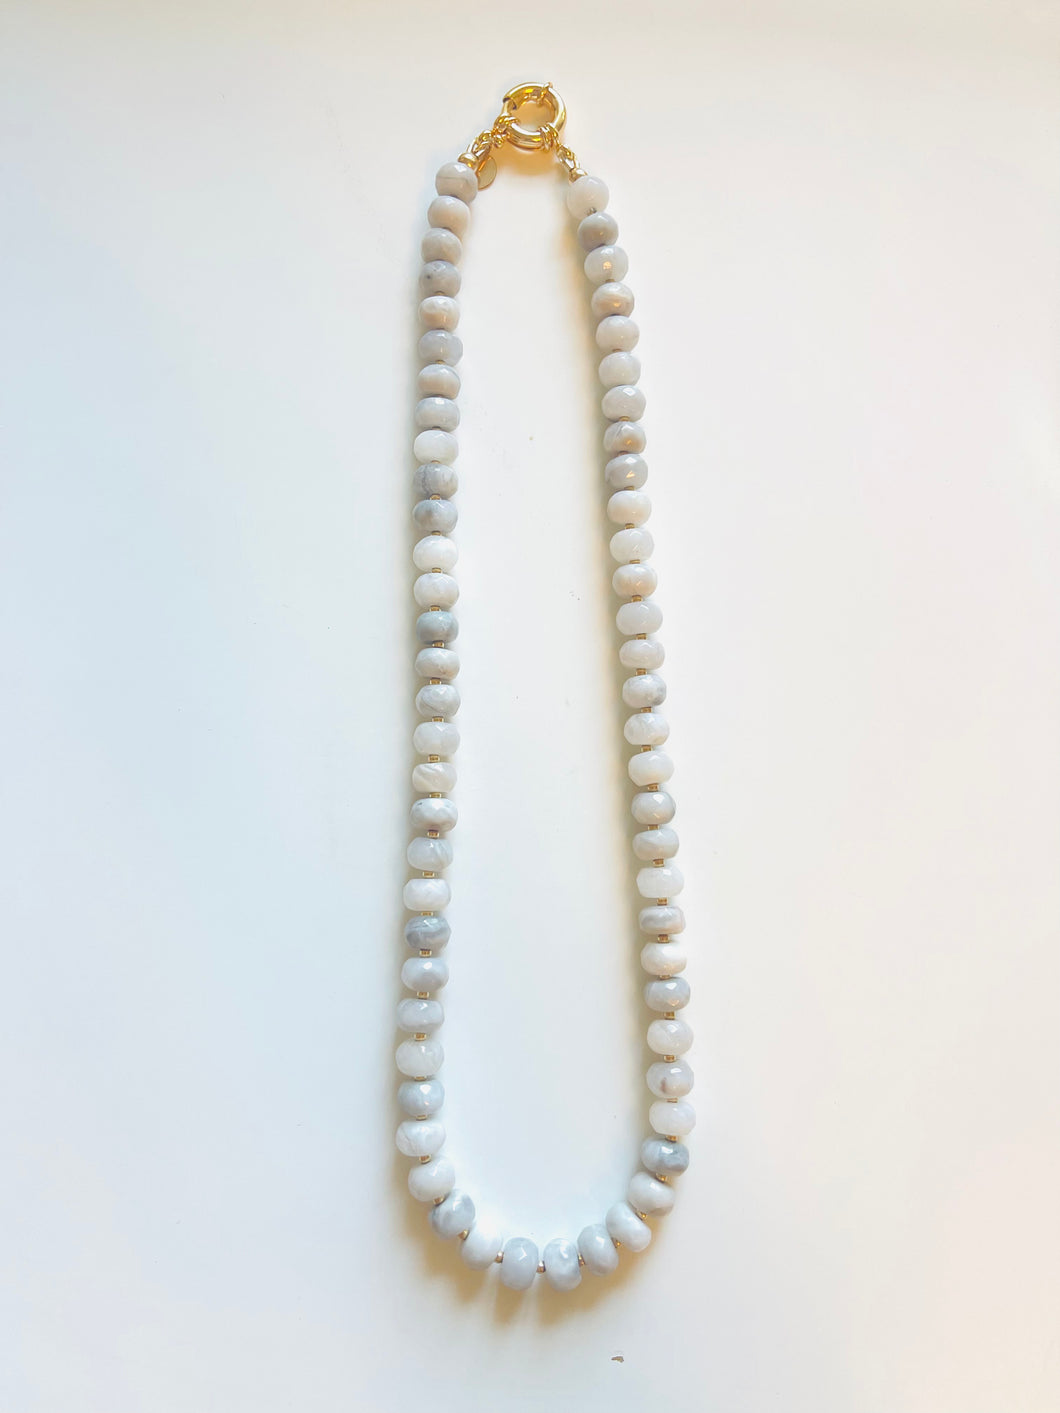 the gemstone necklace